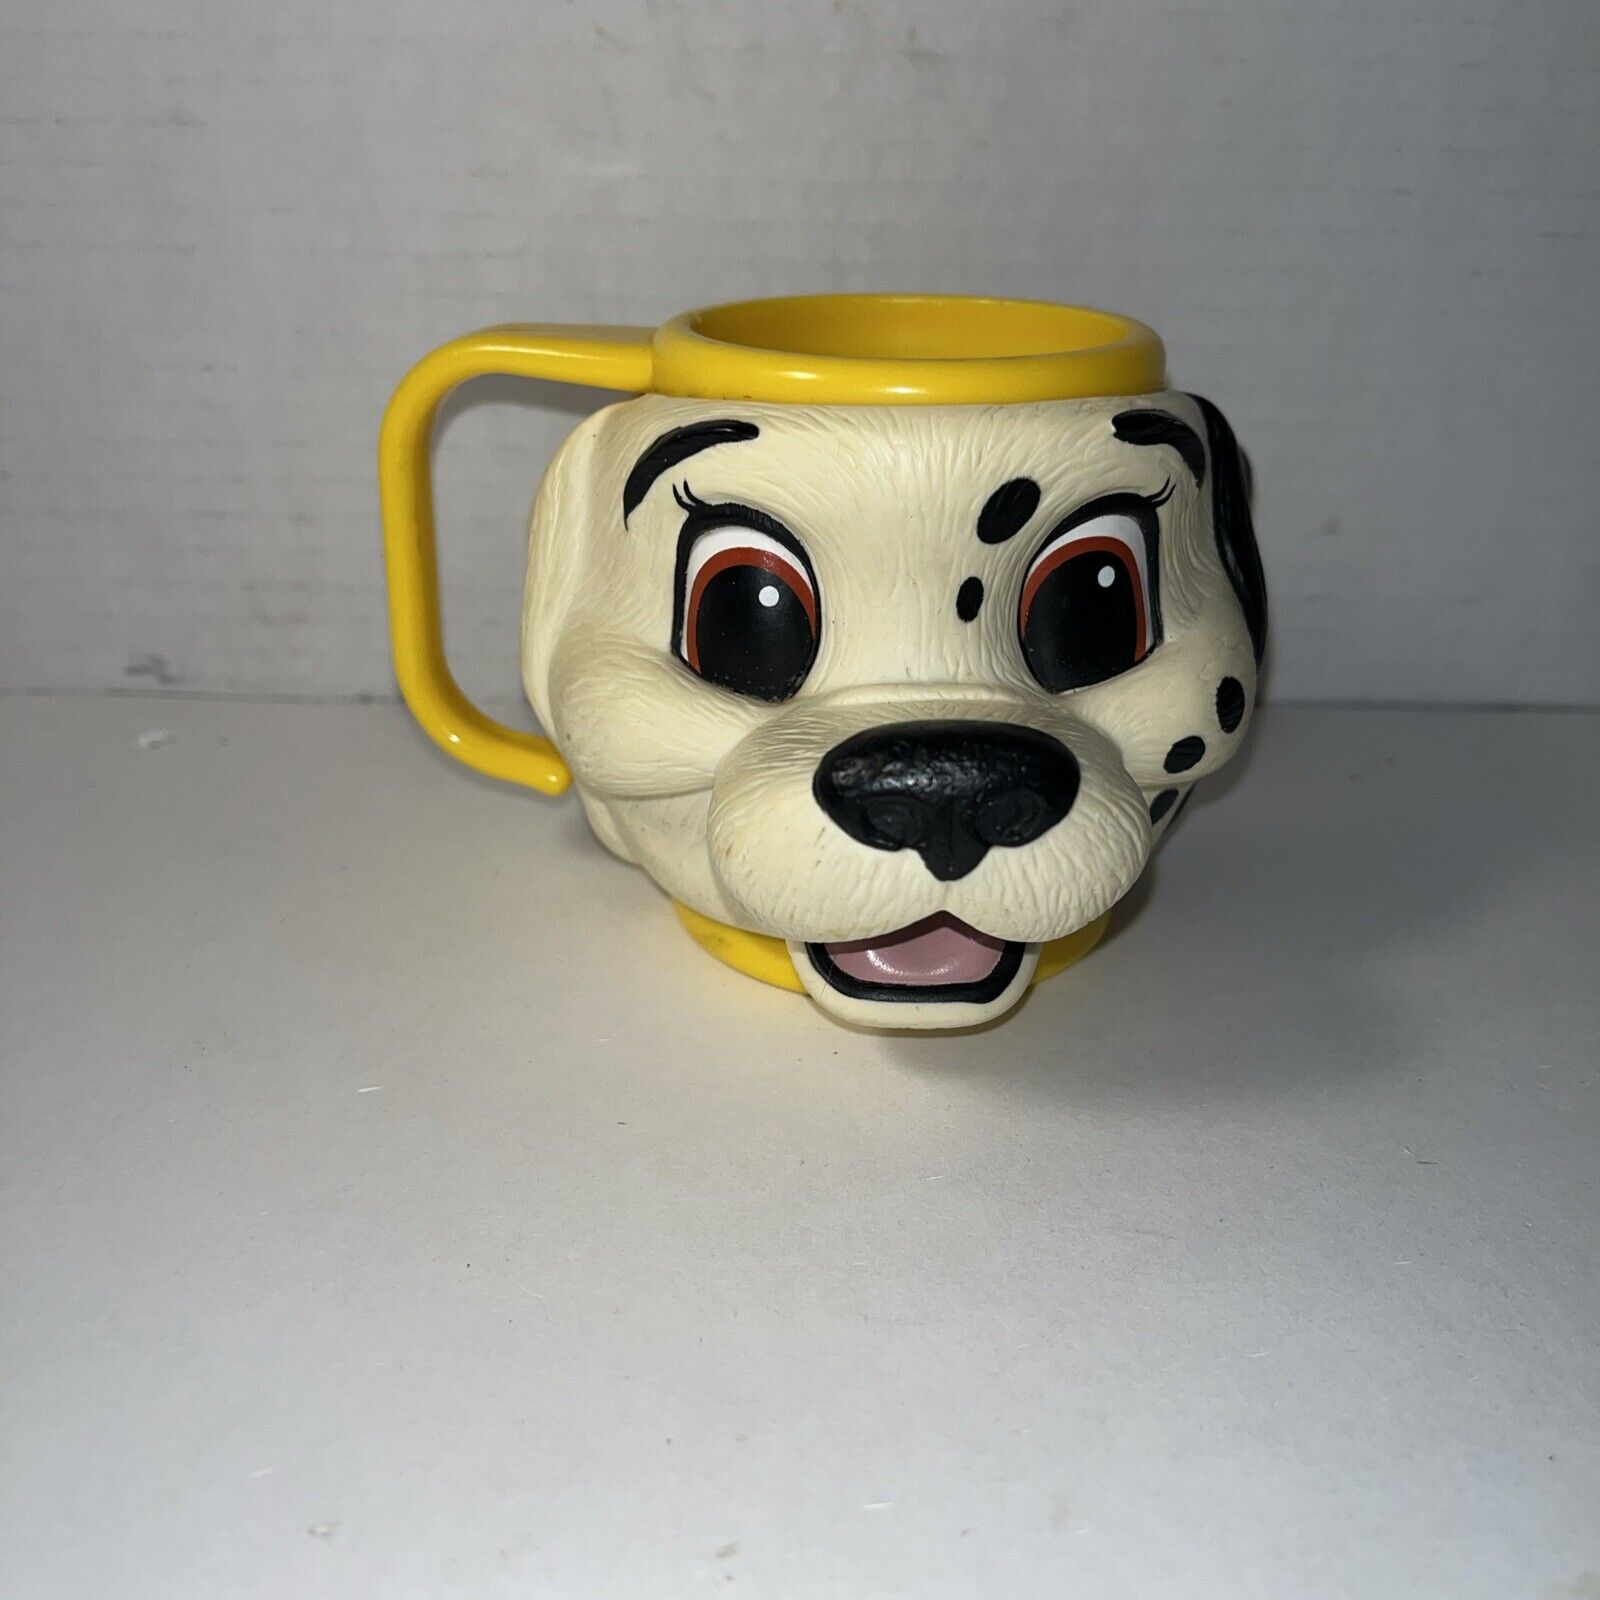 APPLAUSE Vintage Disney's 101 Dalmatians 3D Movie Character Mug Cup